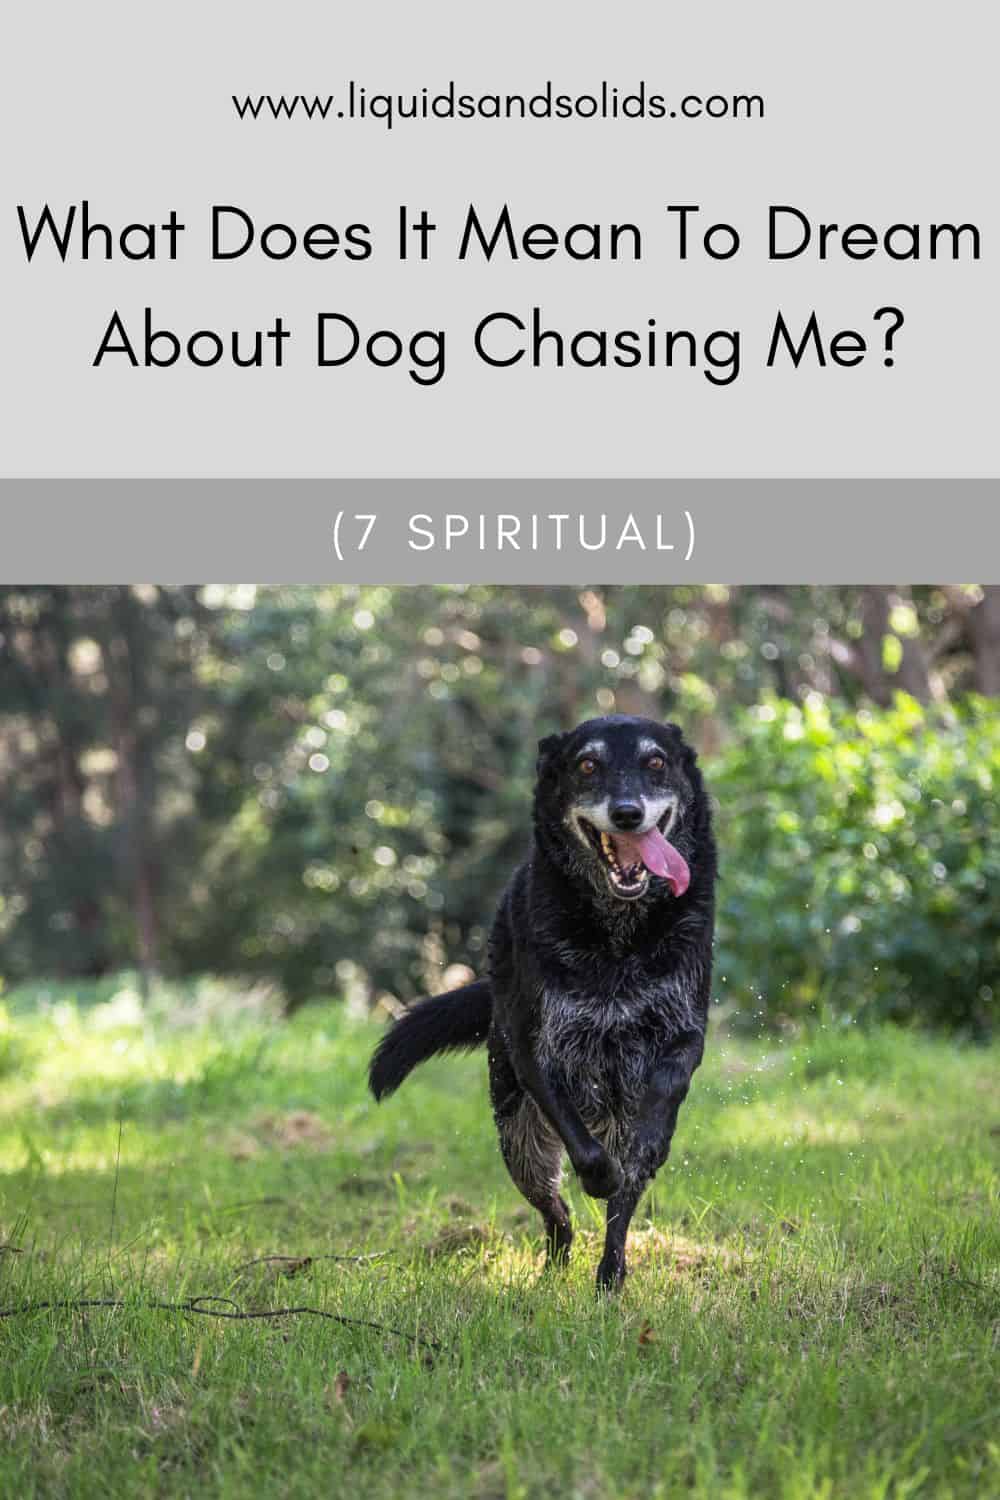  Dream About Dog Chasing Me? (7 spirituális jelentés)